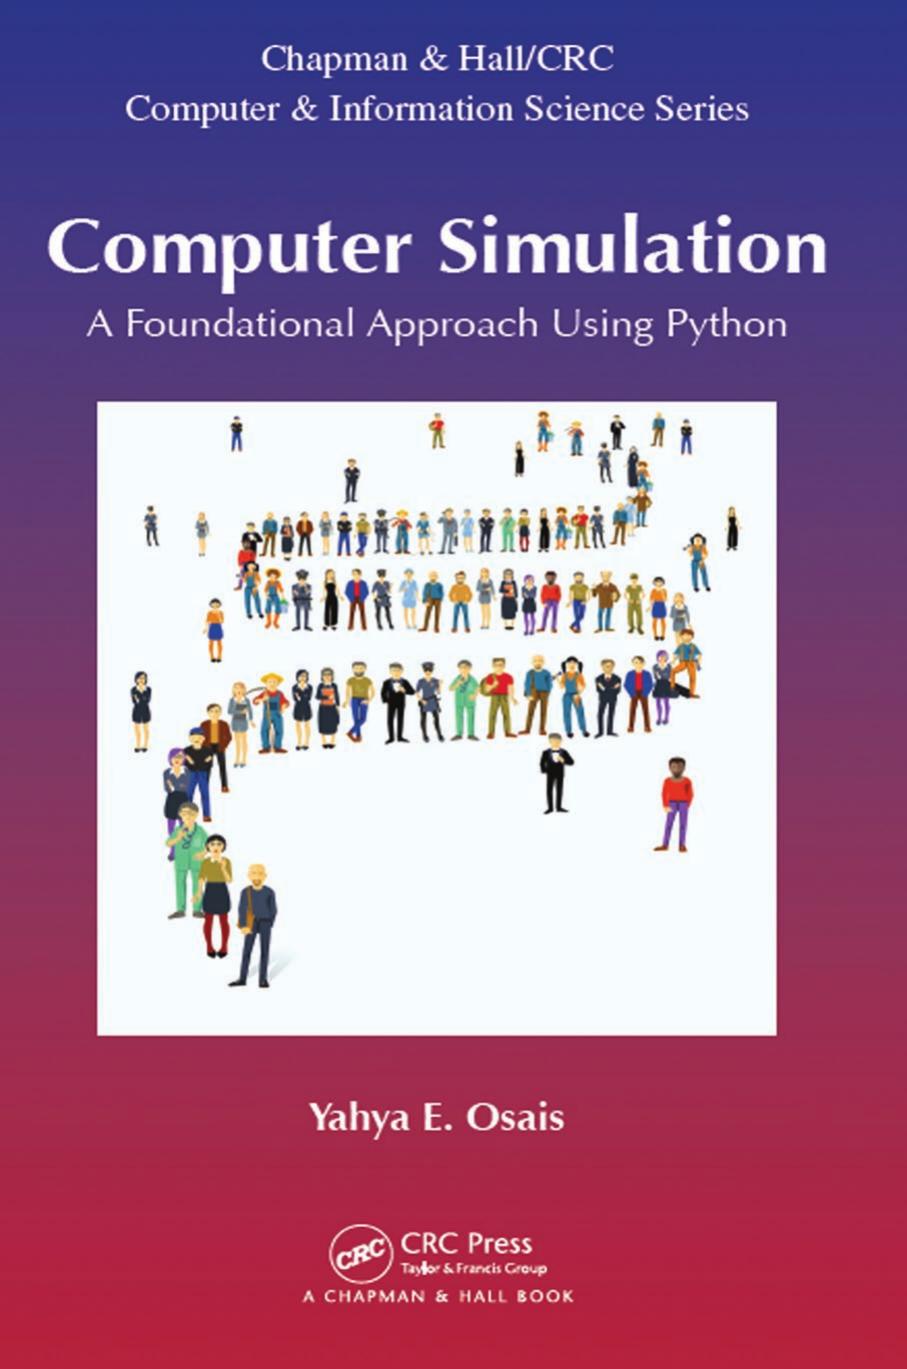 Computer Simulation